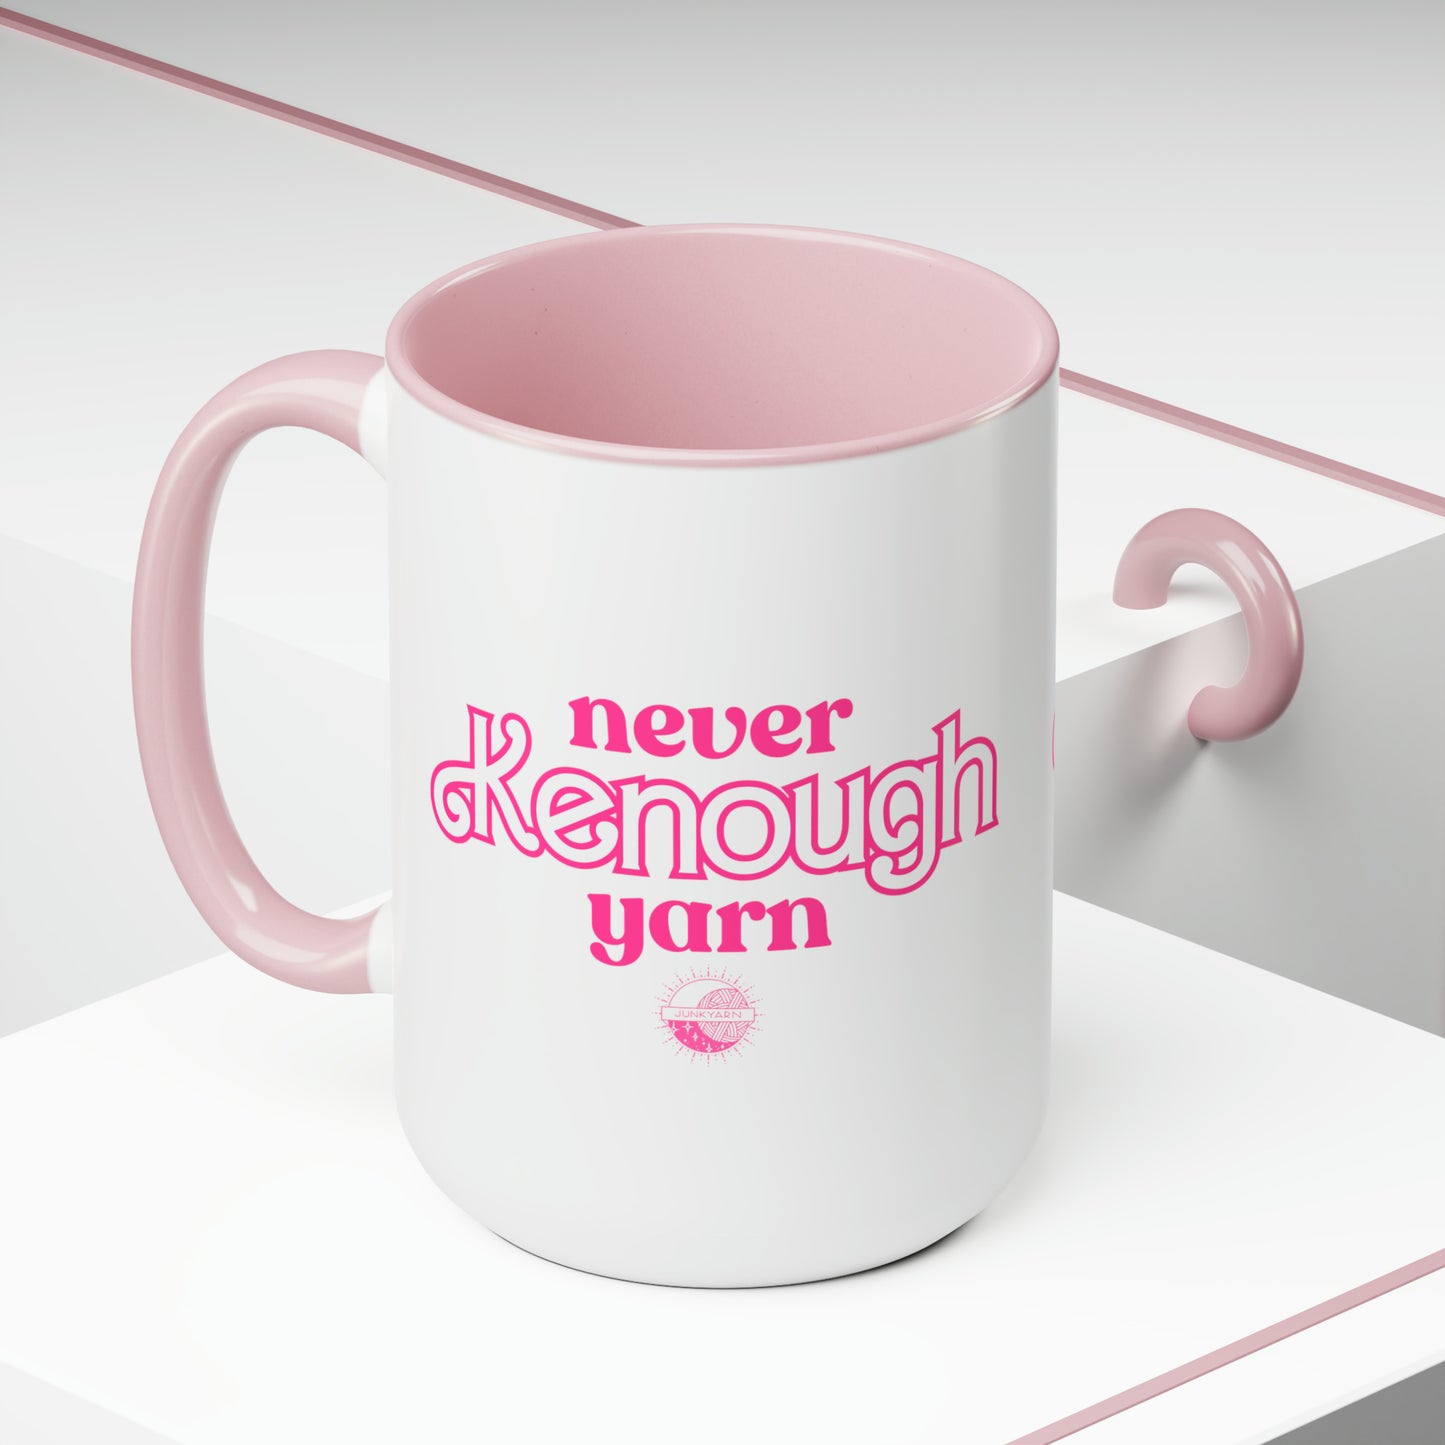 Never Kenough Yarn - Two-Tone Coffee Mugs (15oz)